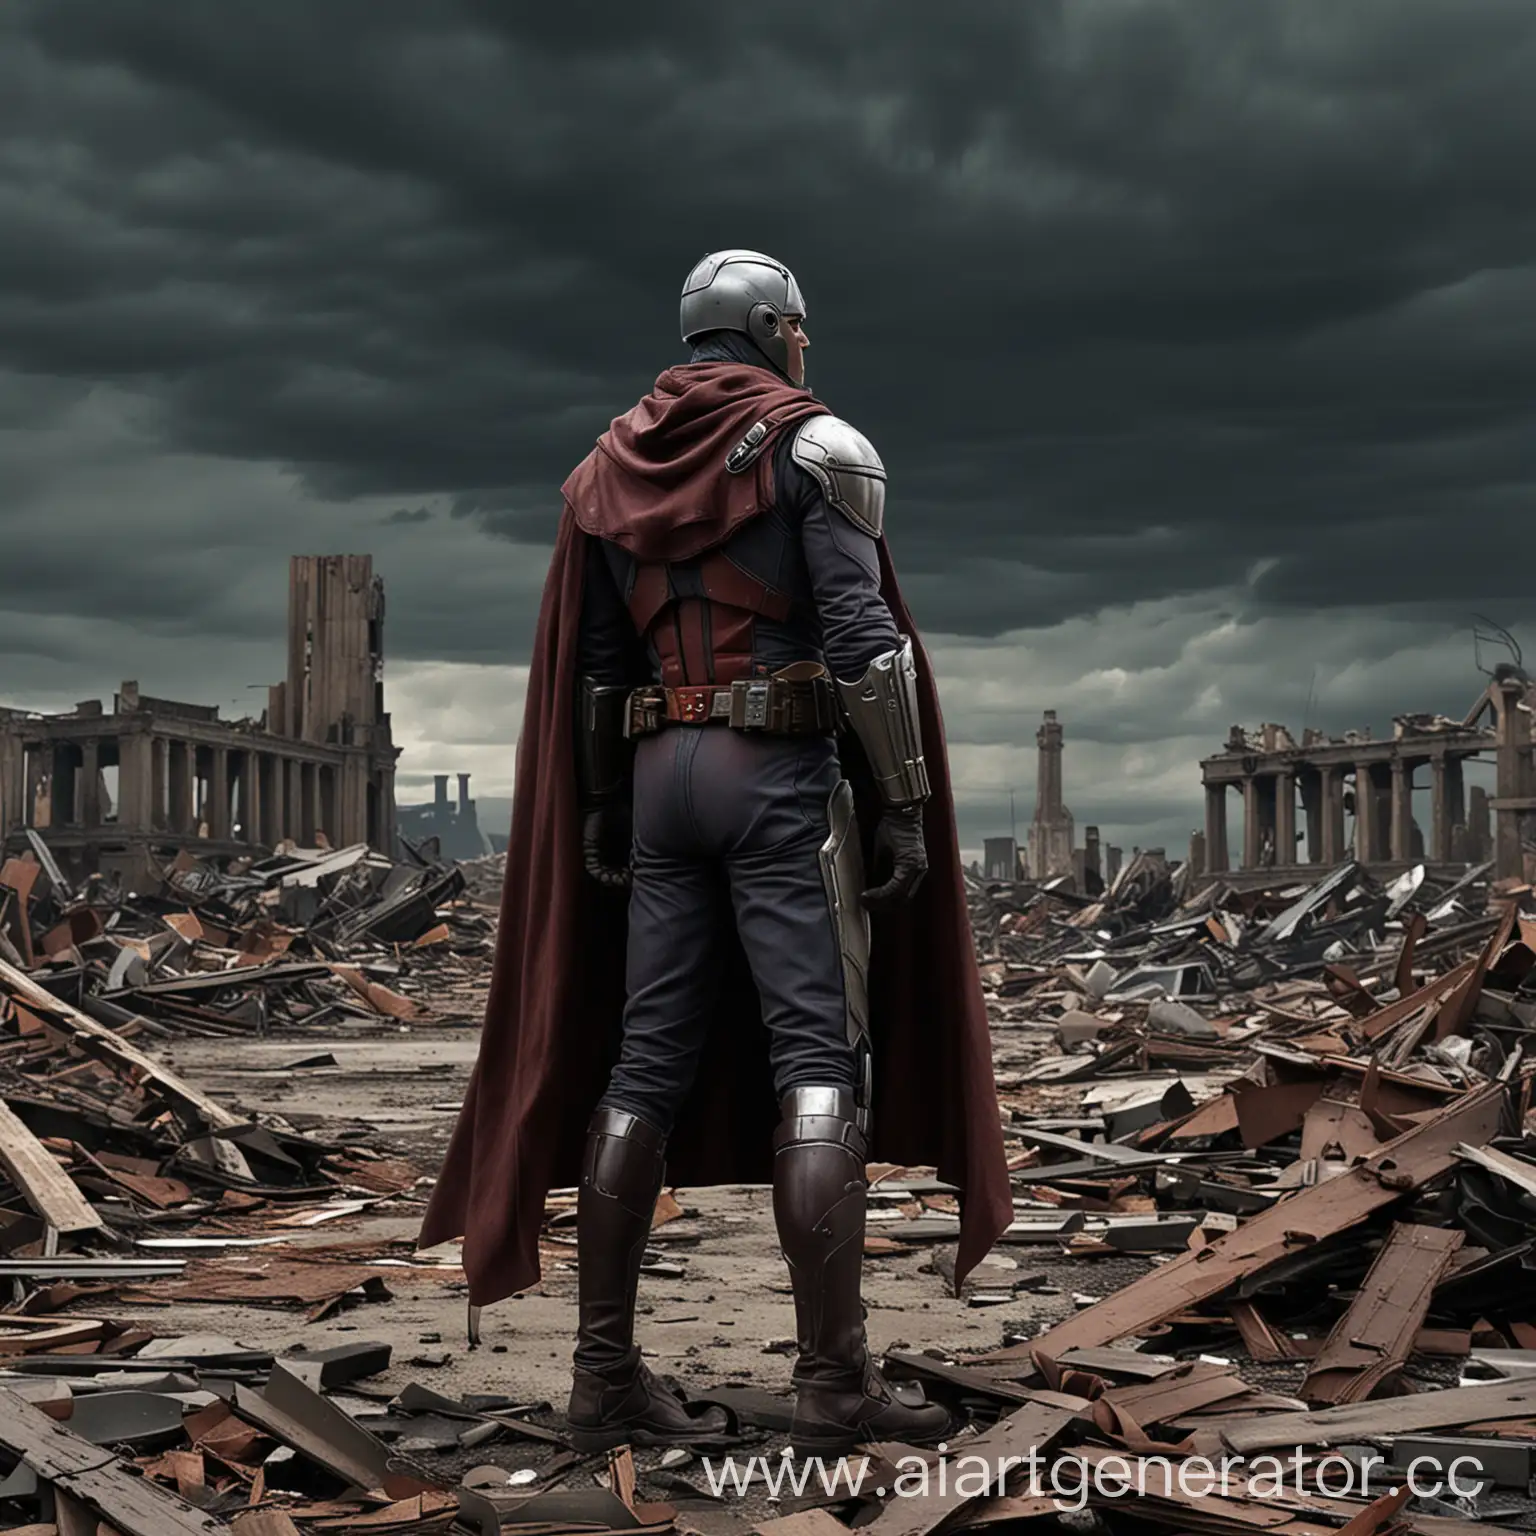 PostApocalyptic-Magneto-Amid-Ruins-and-Dark-Skies